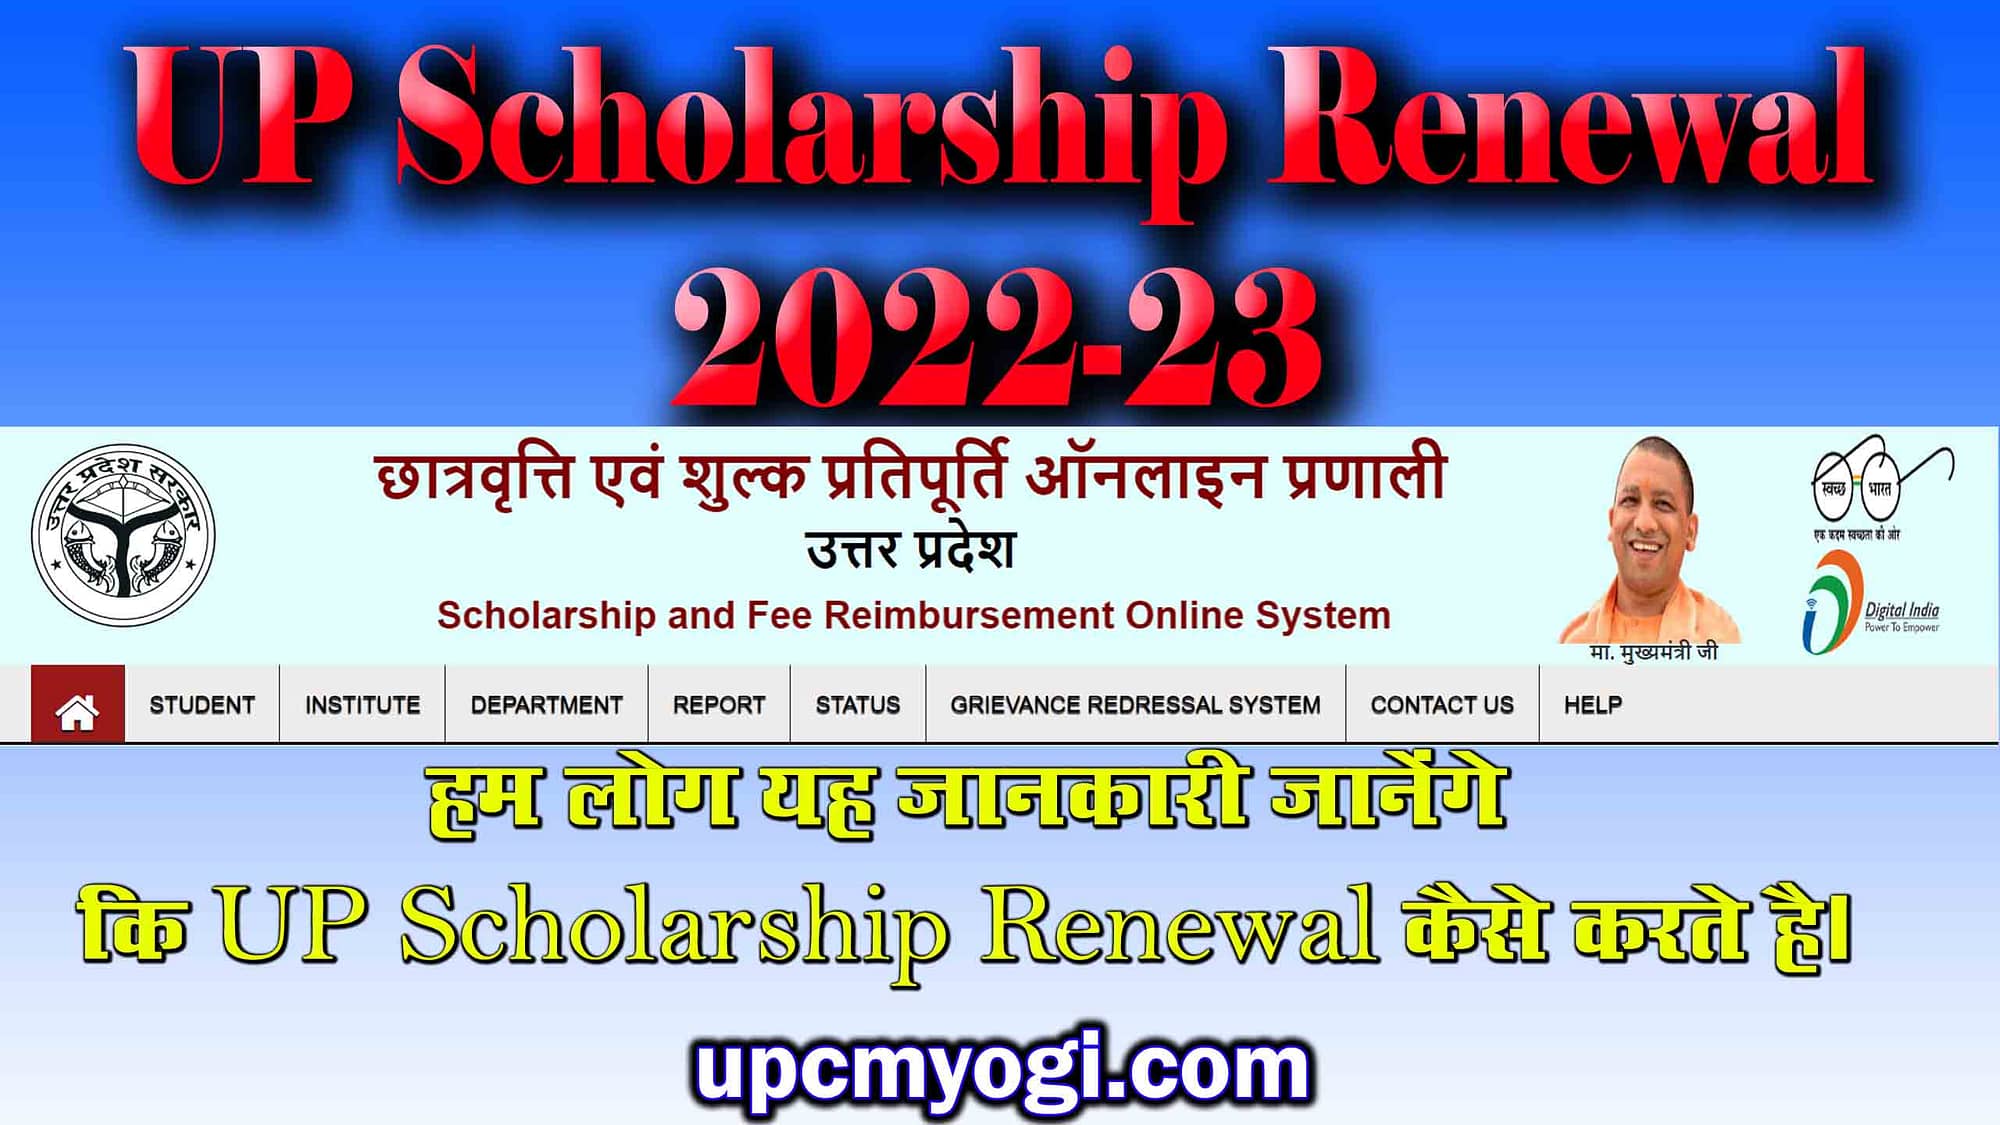 UP Scholarship Renewal 2022-23